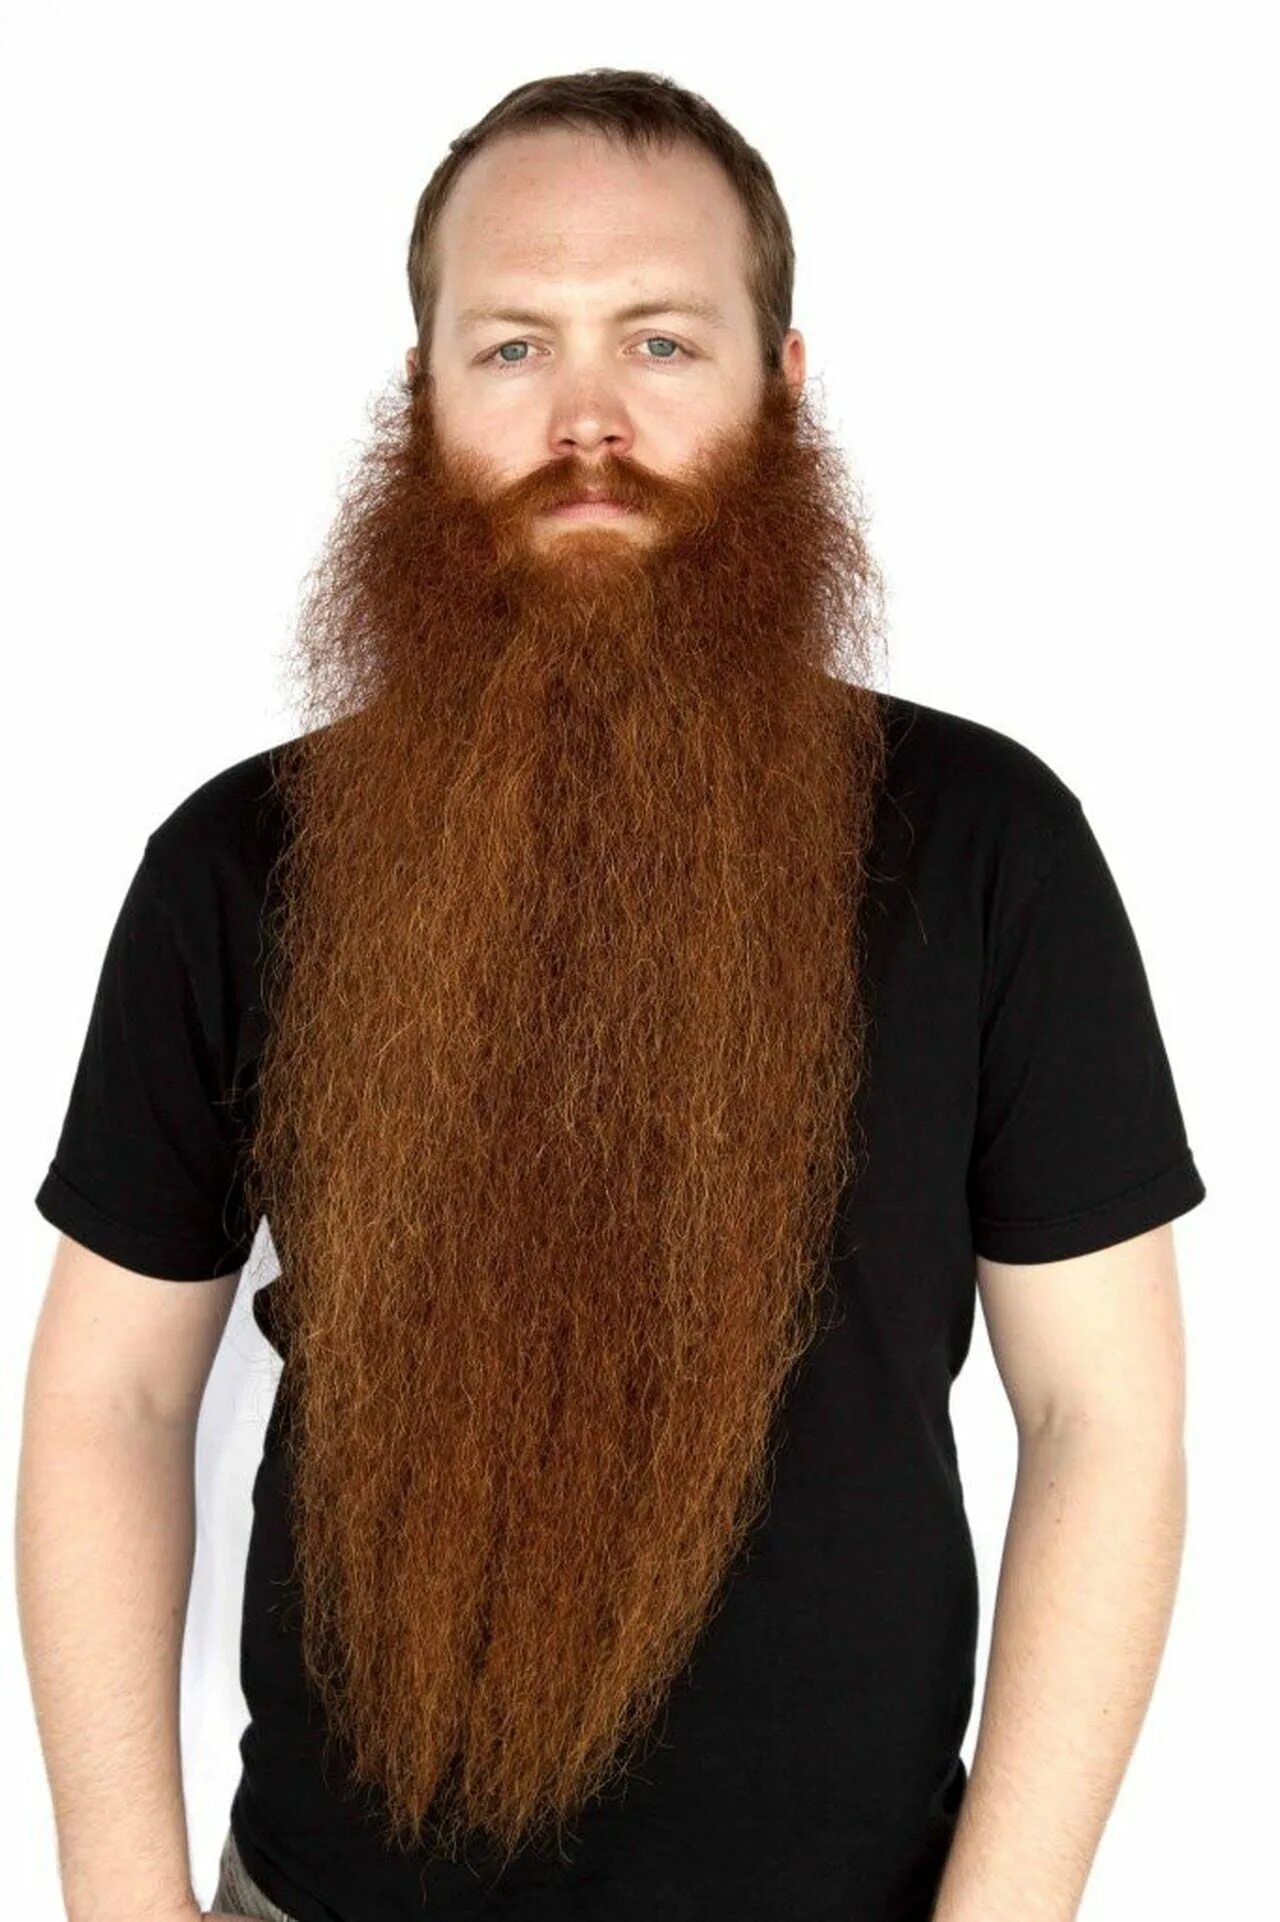 Длинная бородка. Ханс Лангсет борода. Длинная борода. Огромная борода. Длинная борода у мужчин.